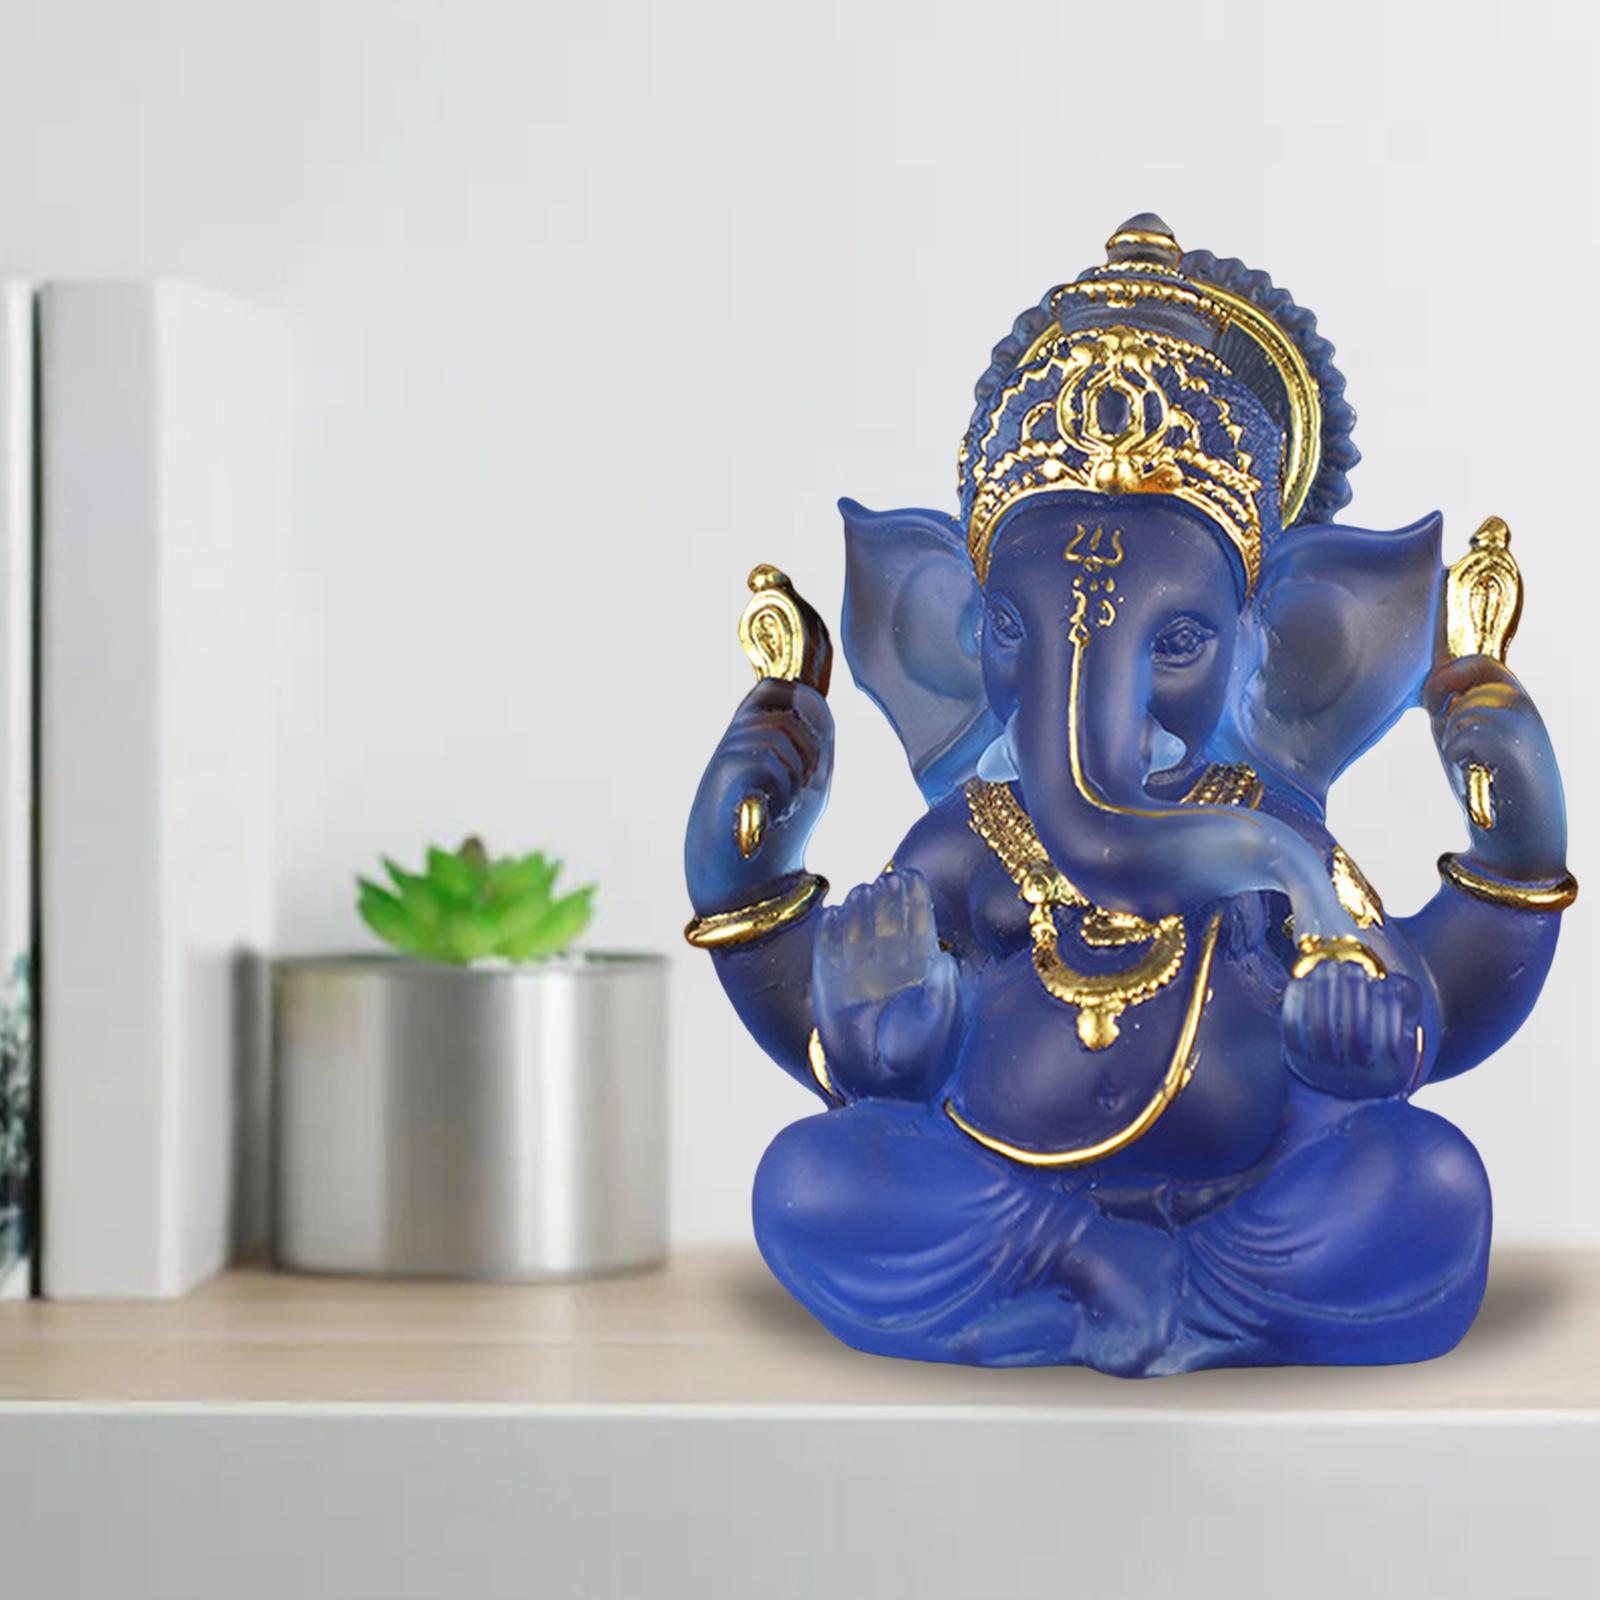 Ganesha Figurine Indian Fengshui Lord Ganesh Statues Home Ornaments Crafts Blue